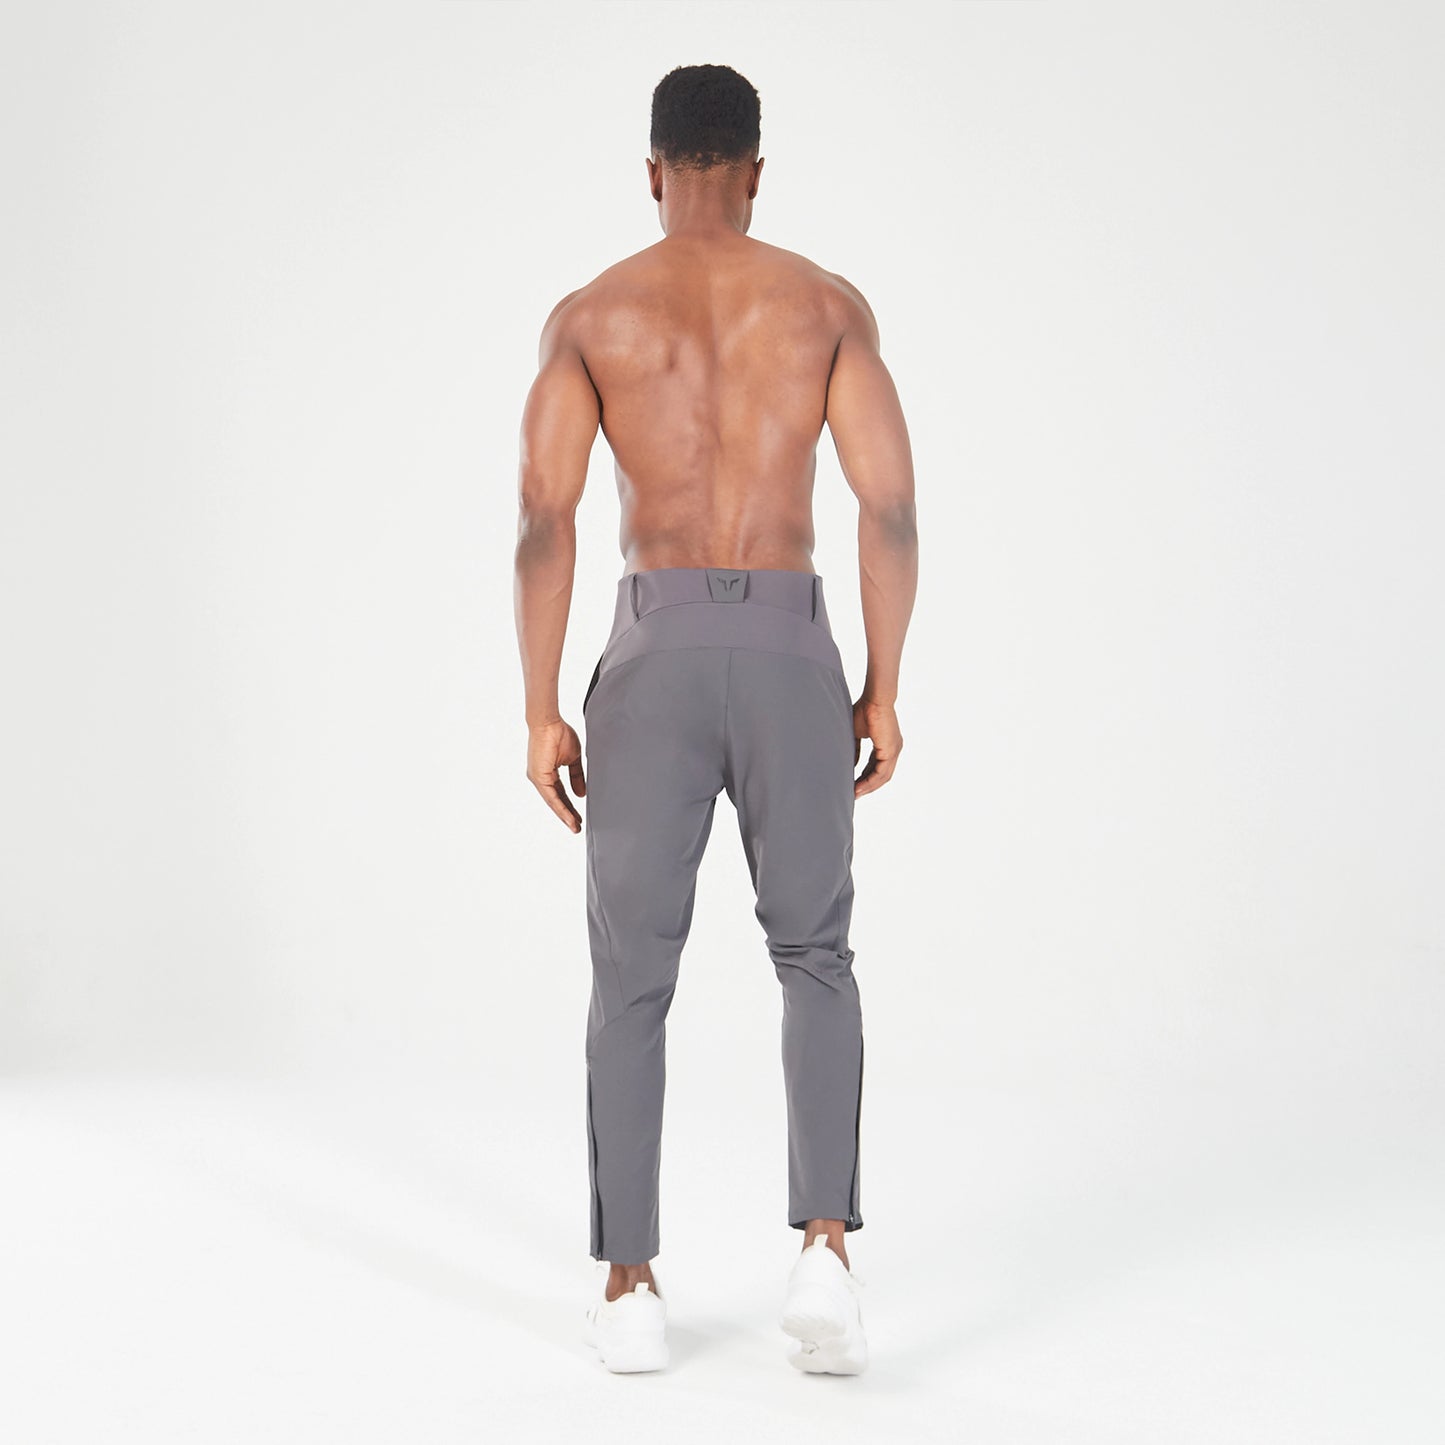 squatwolf-gym-wear-statement-ribbed-smart-pants-asphalt-workout-pants-for-men